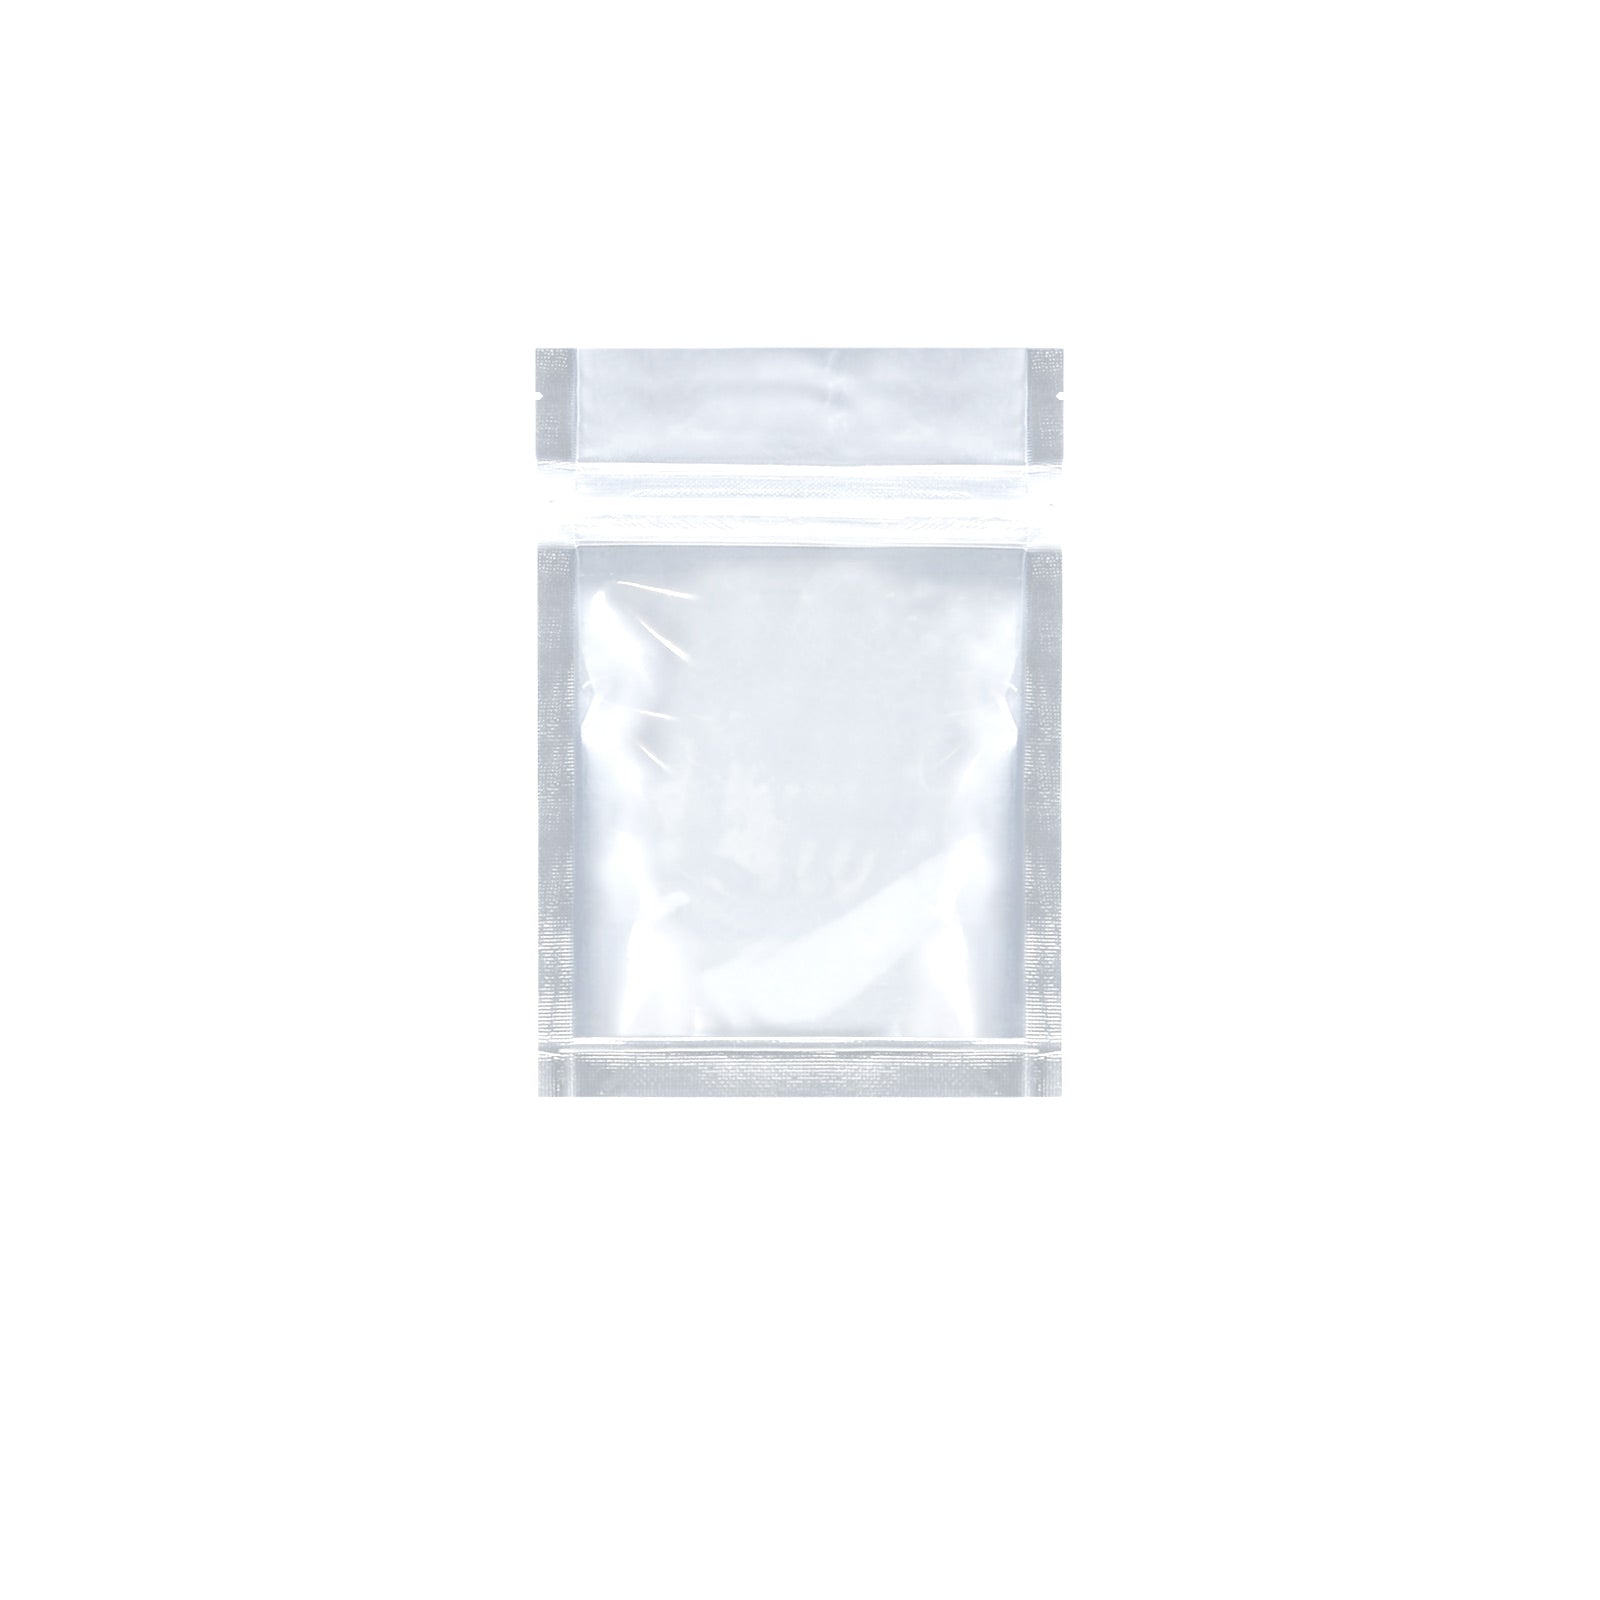 Mylar Bag Tear Notch Clear White 1g - 100 Count